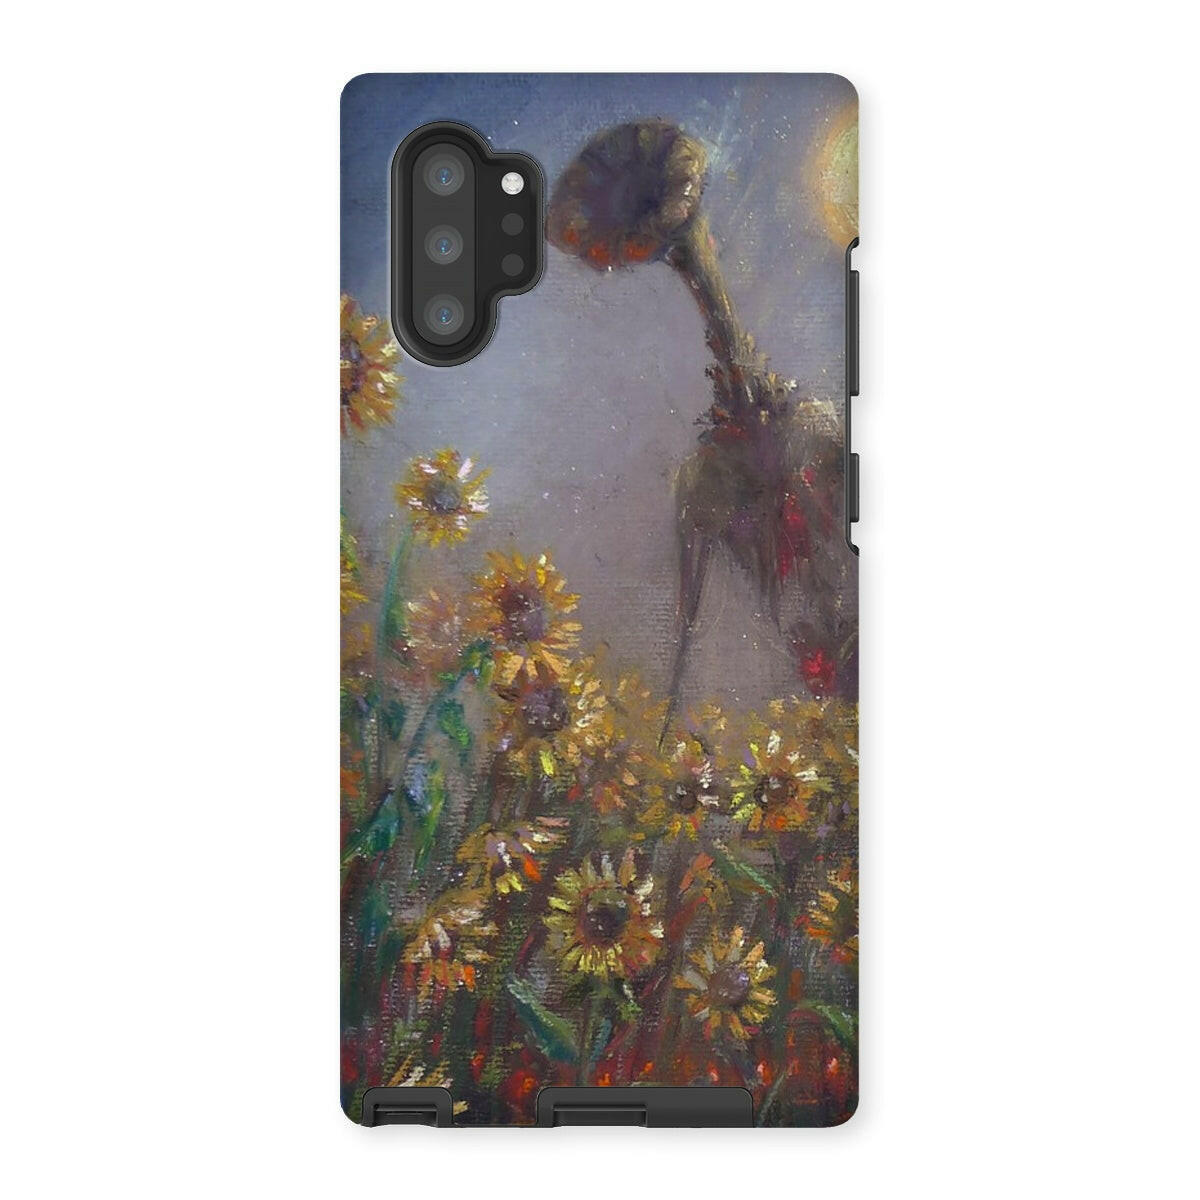 Sunflower art Tough Phone Case.